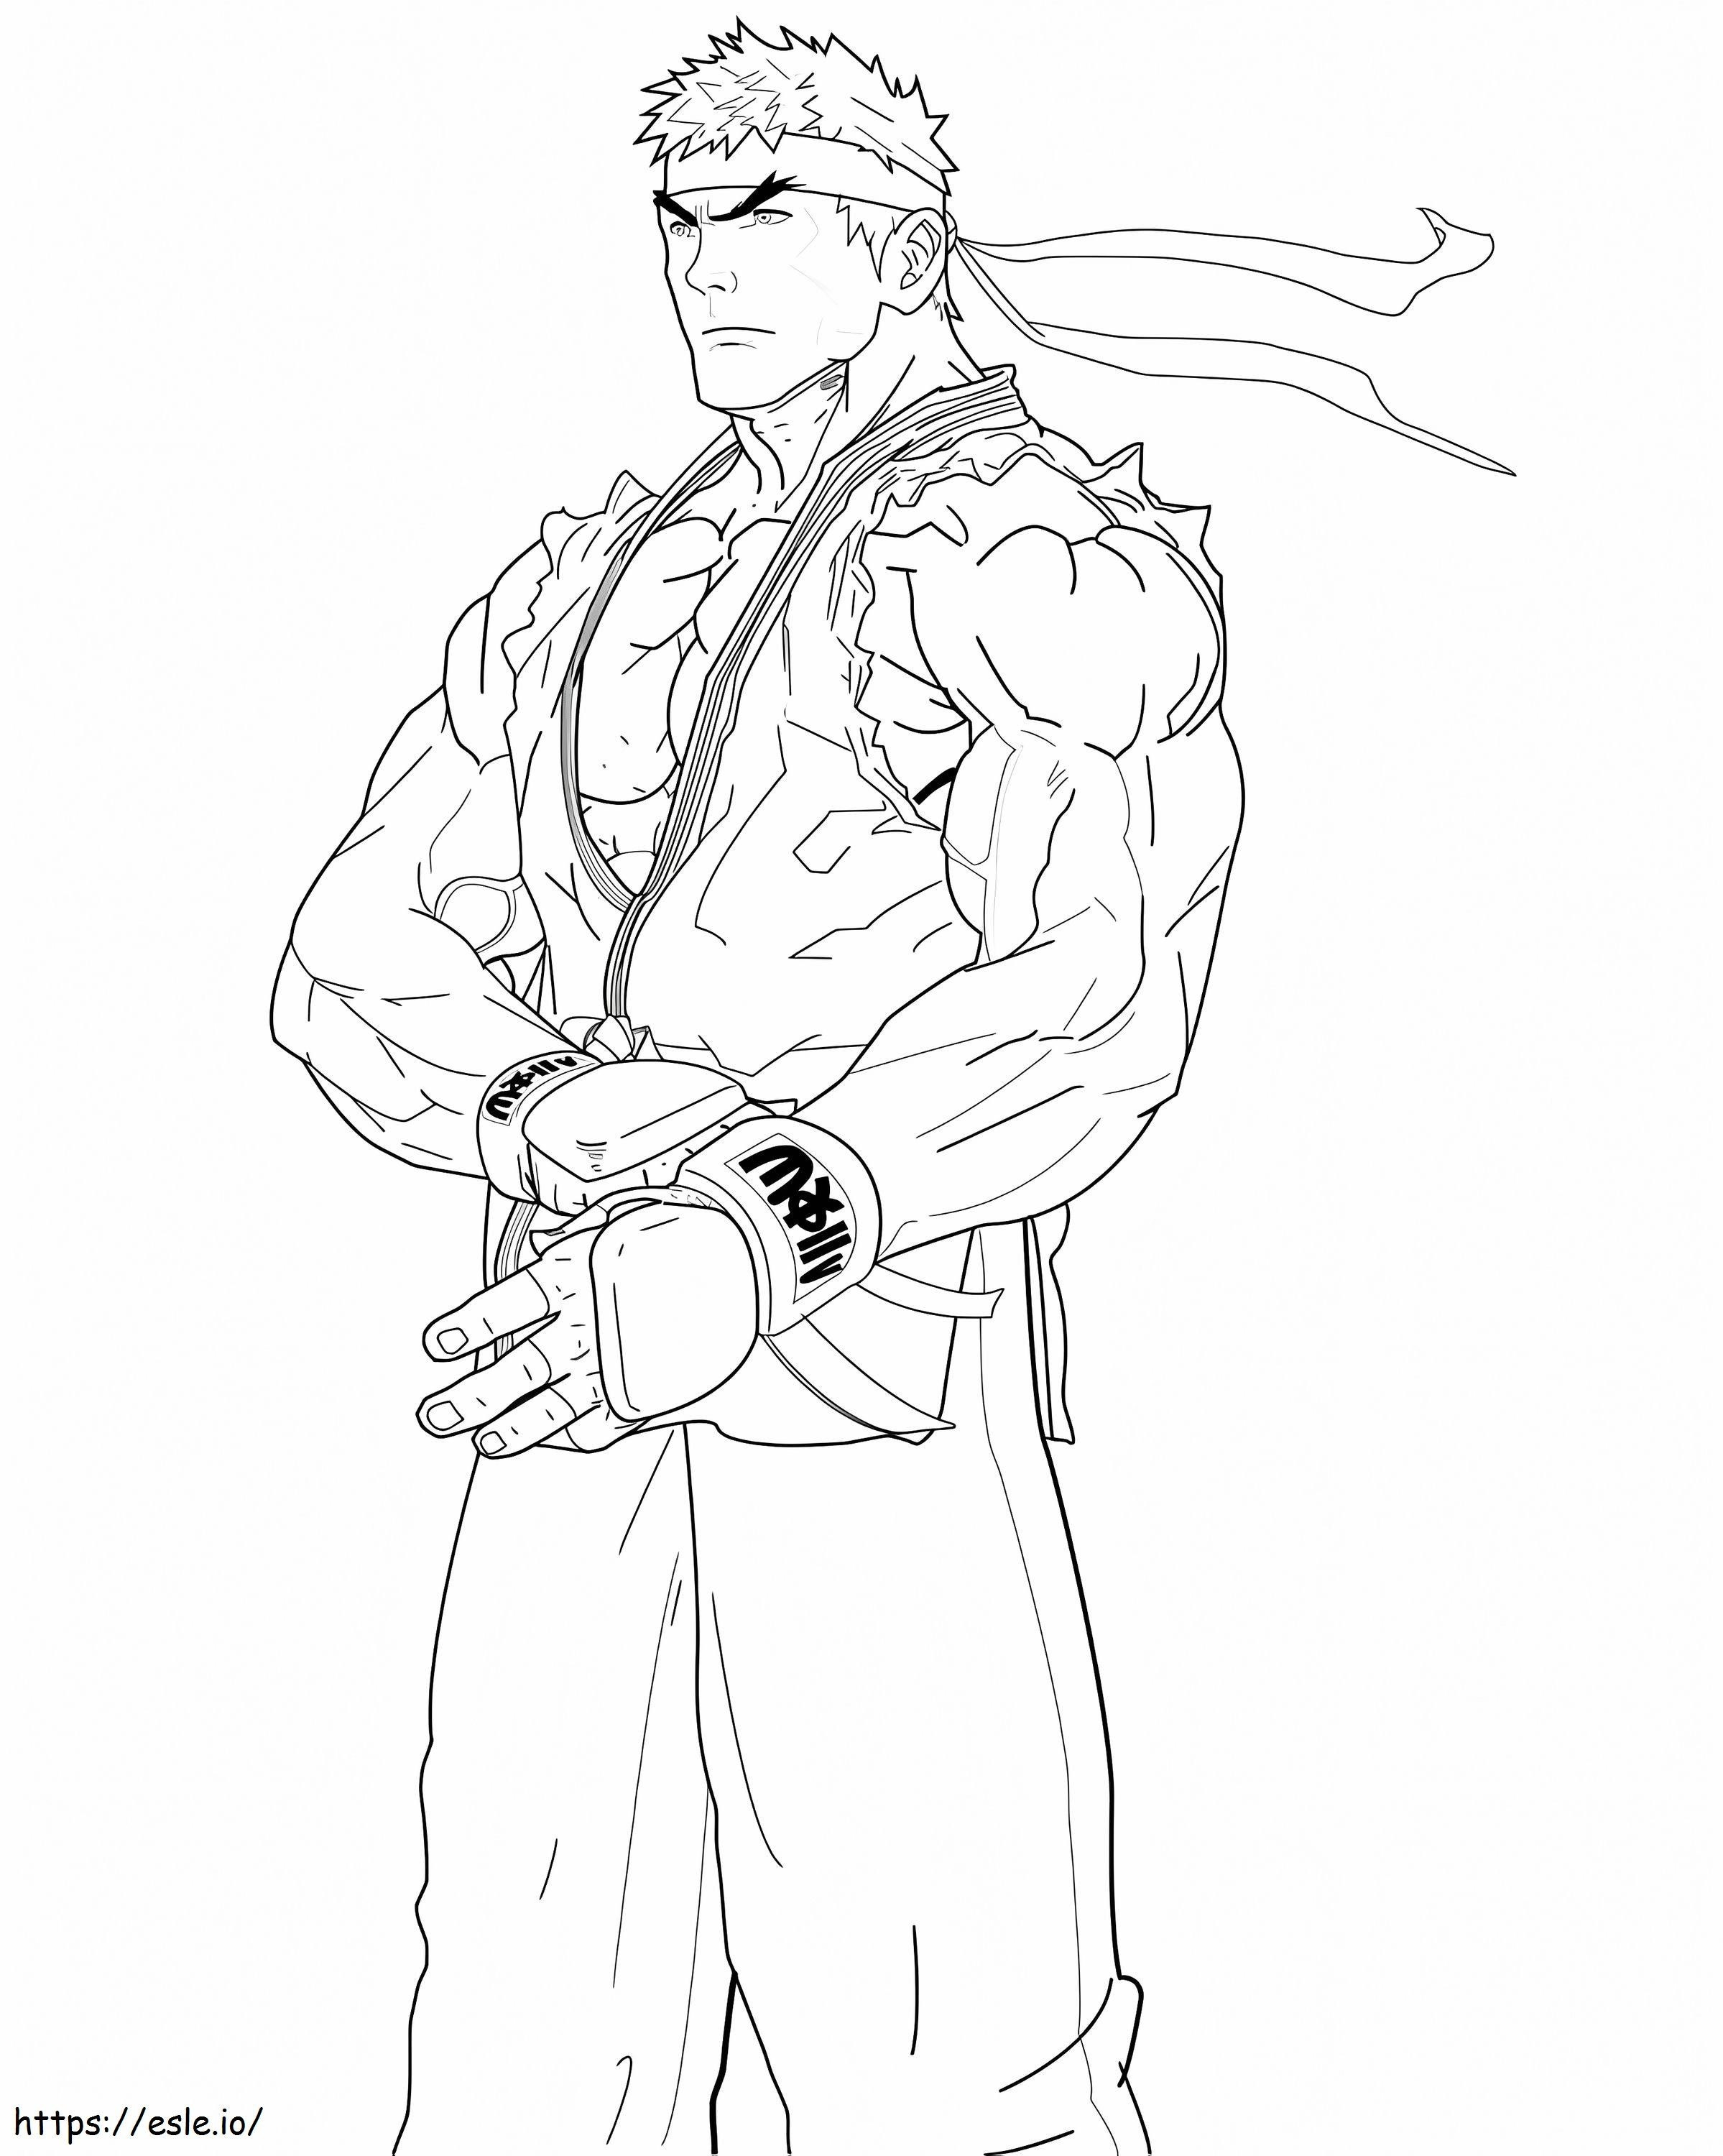 Legal Ryu Street Fighter para colorir